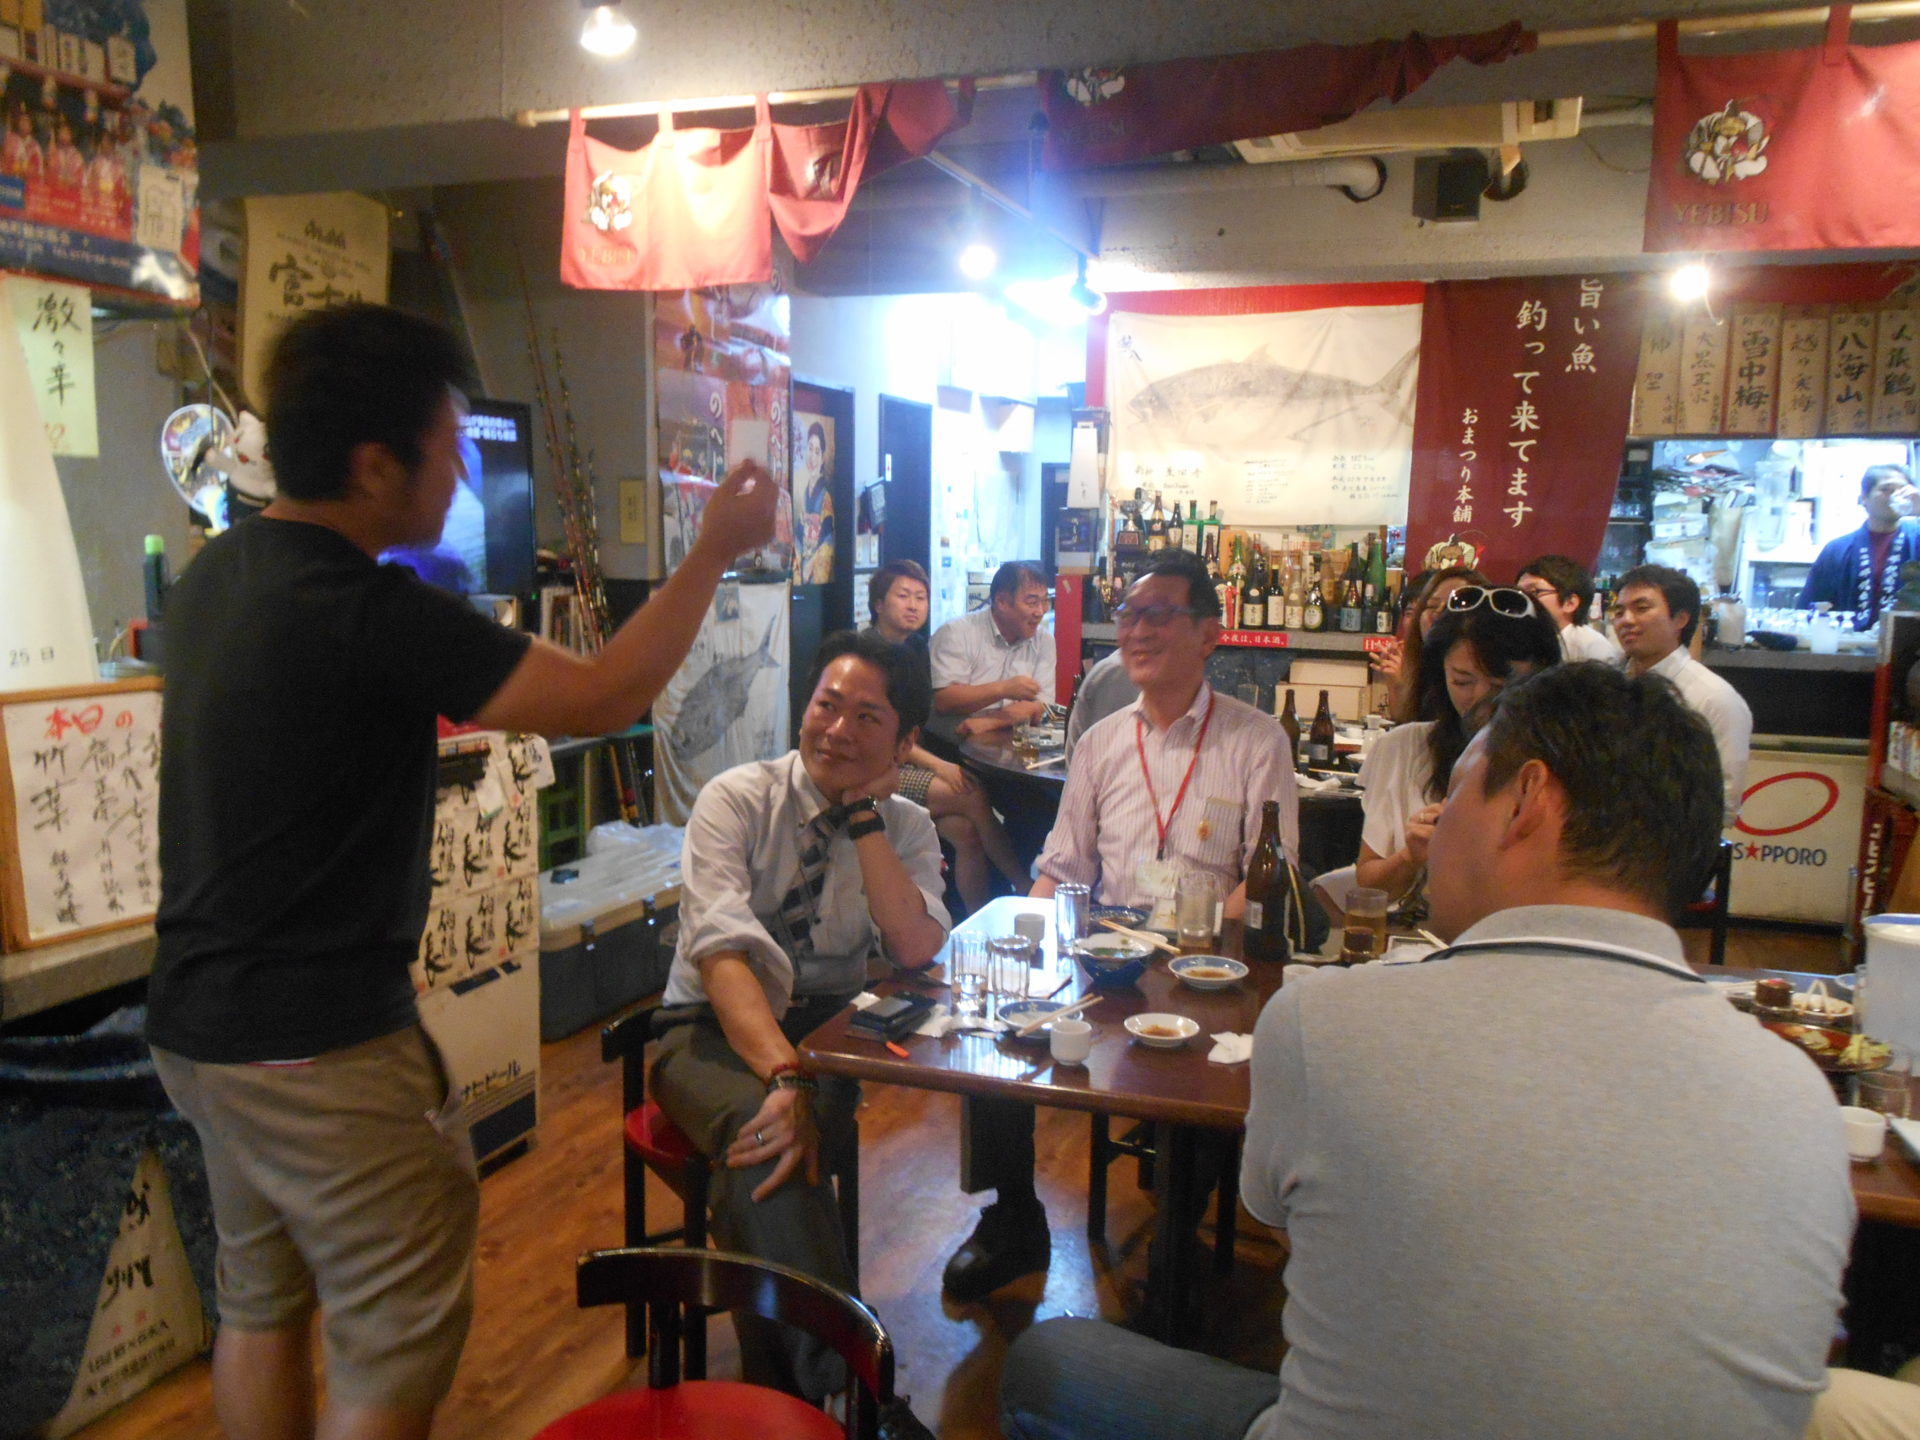 DSCN5648 1920x1440 - 2015年9月14日 AOsuki定例飲み会開催しました。